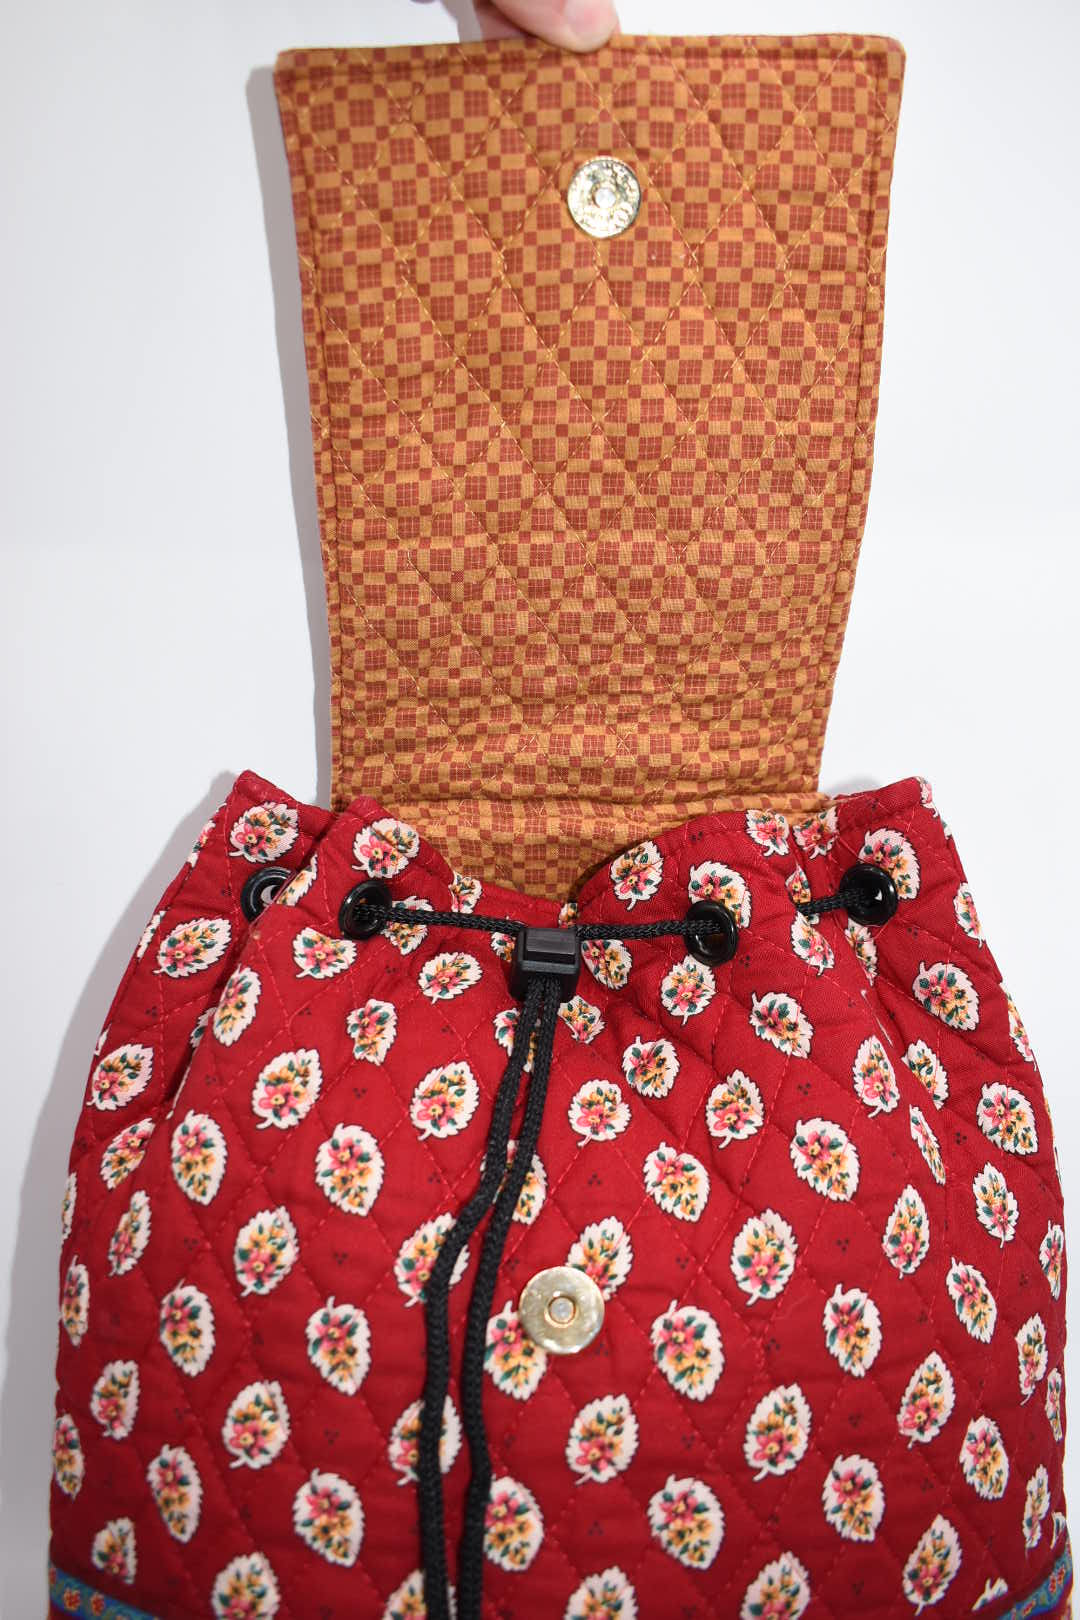 Vera Bradley "Mimi" Backpack in "Red Leaf" Pattern